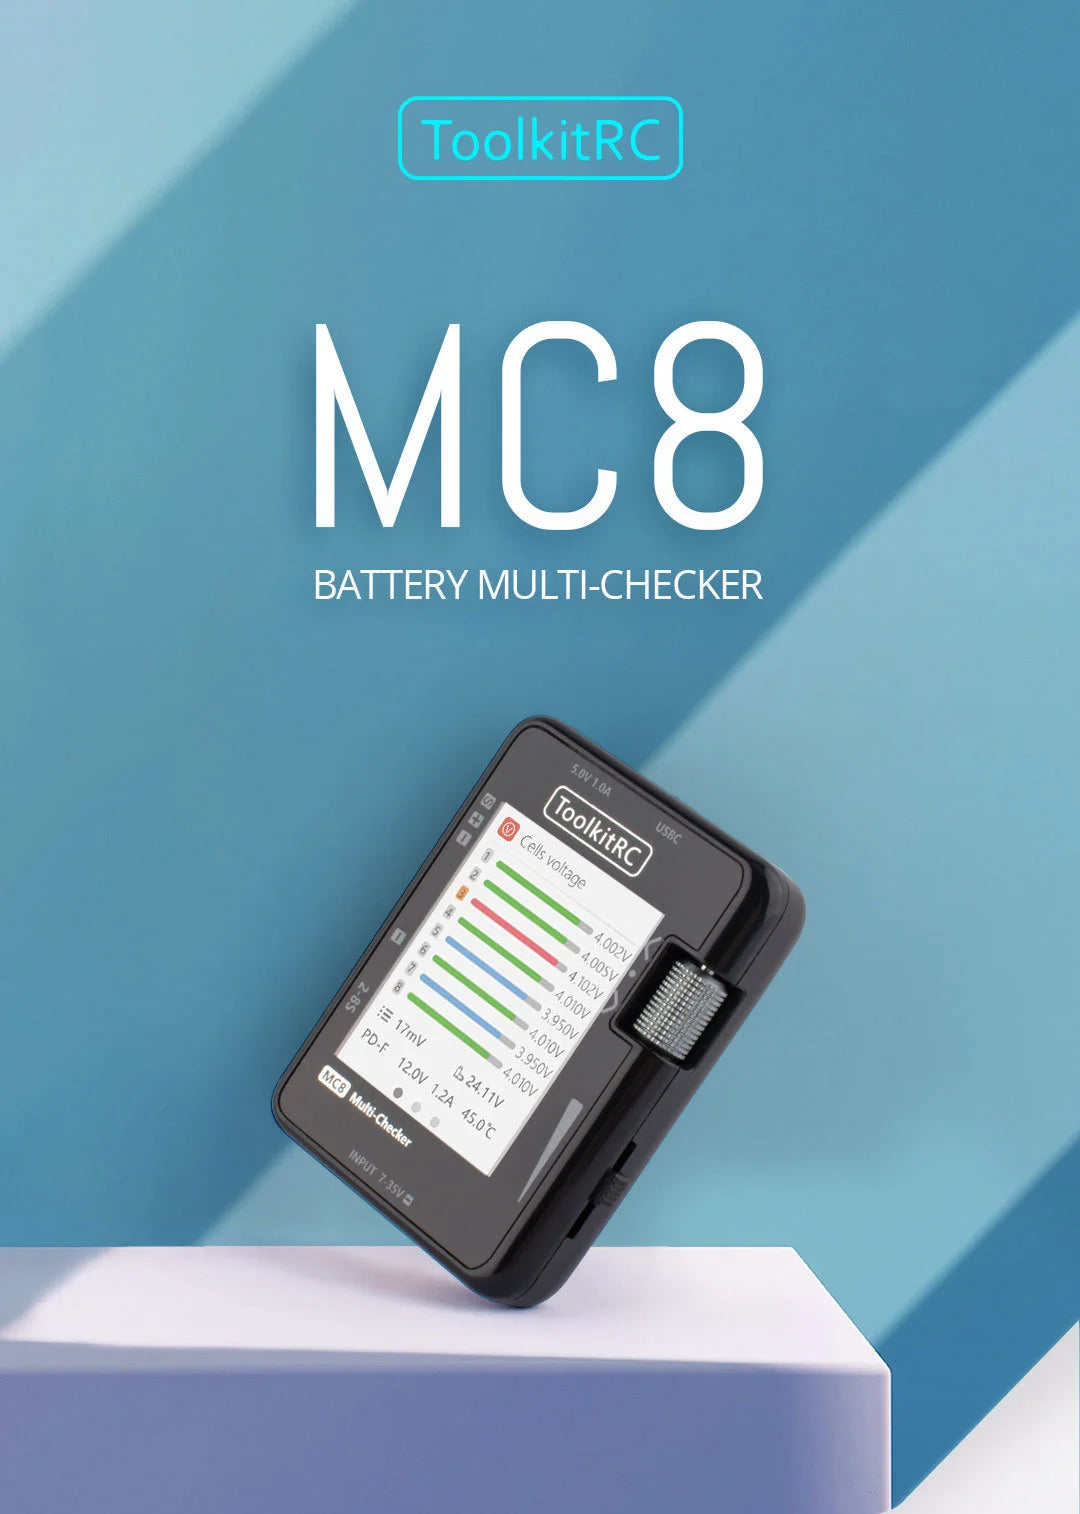 ToolkitRC MC8 BATTERY MULTI-CHECKER 4 Po